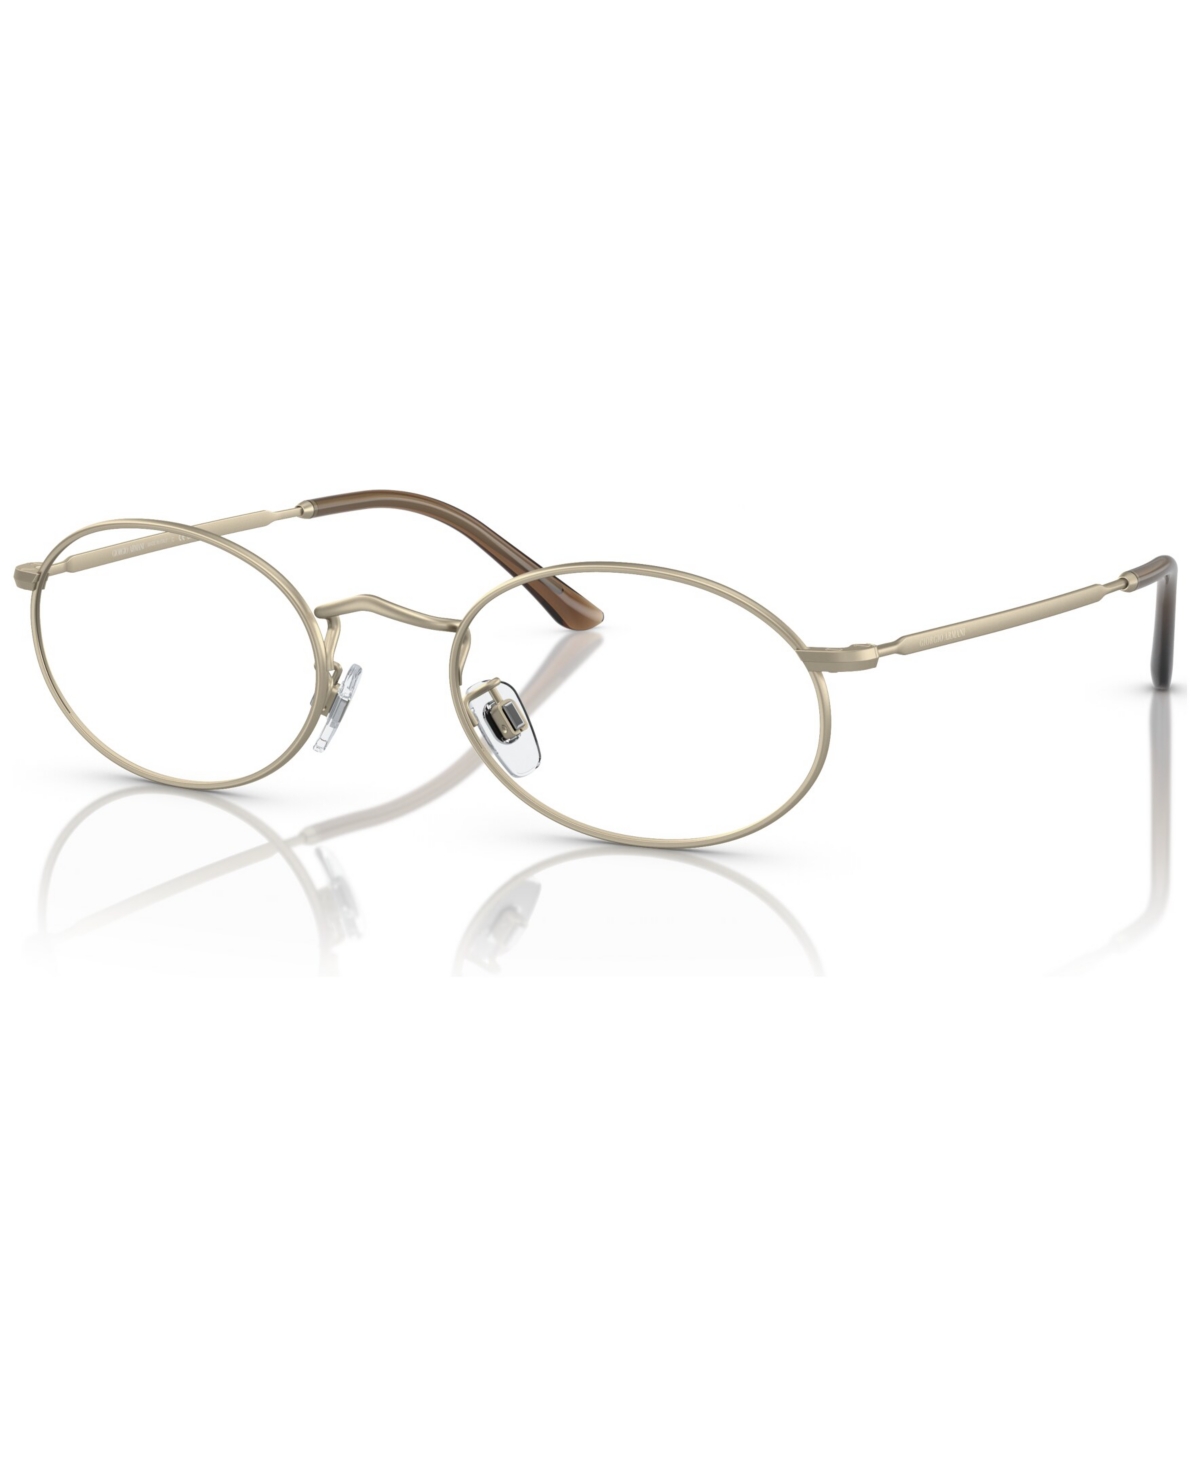 Men's Oval Eyeglasses, Ar 131VM 50 - Matte Pale Gold-Tone